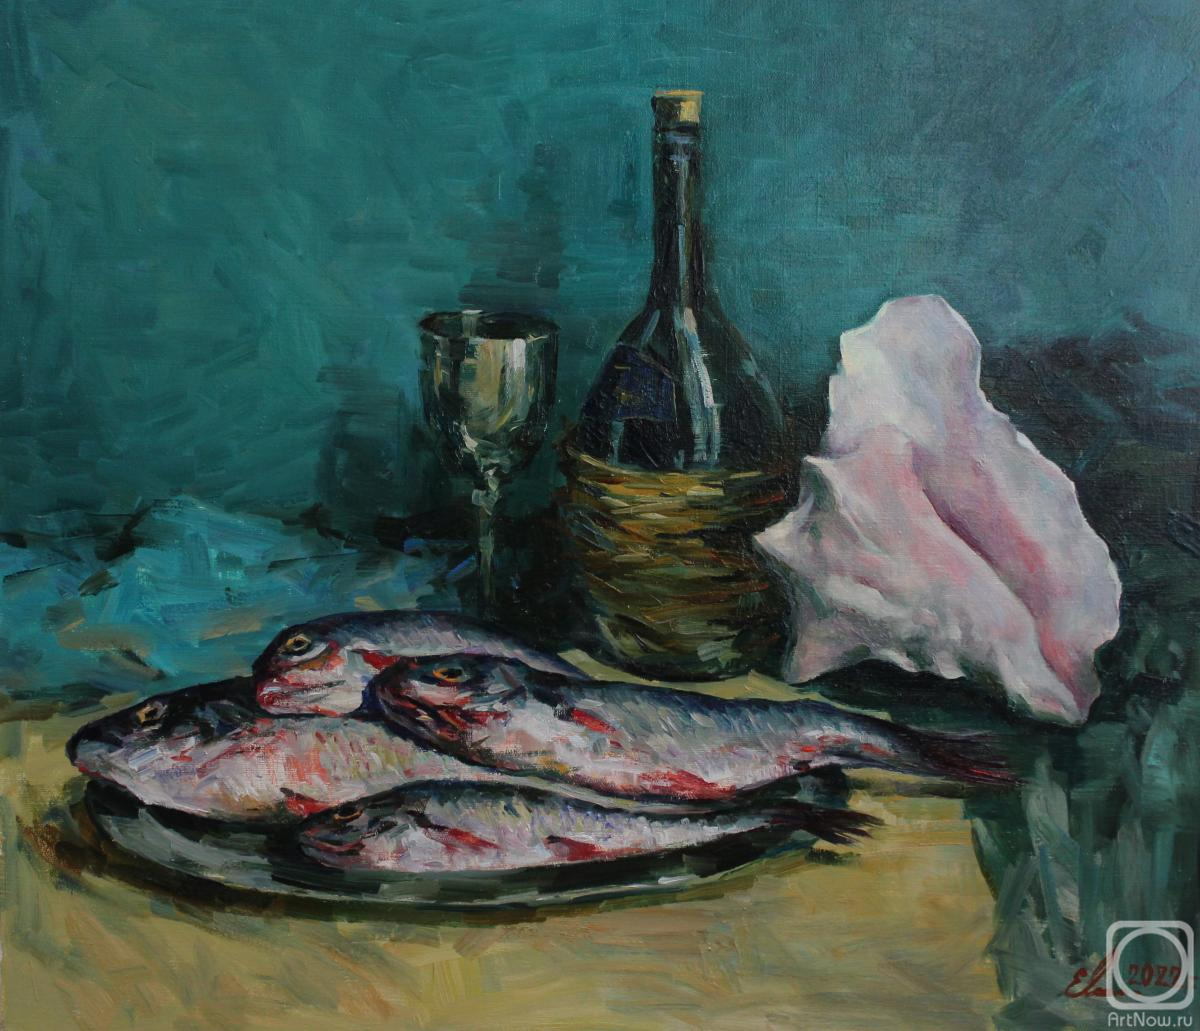 Malykh Evgeny. Still life with the fish and seashell